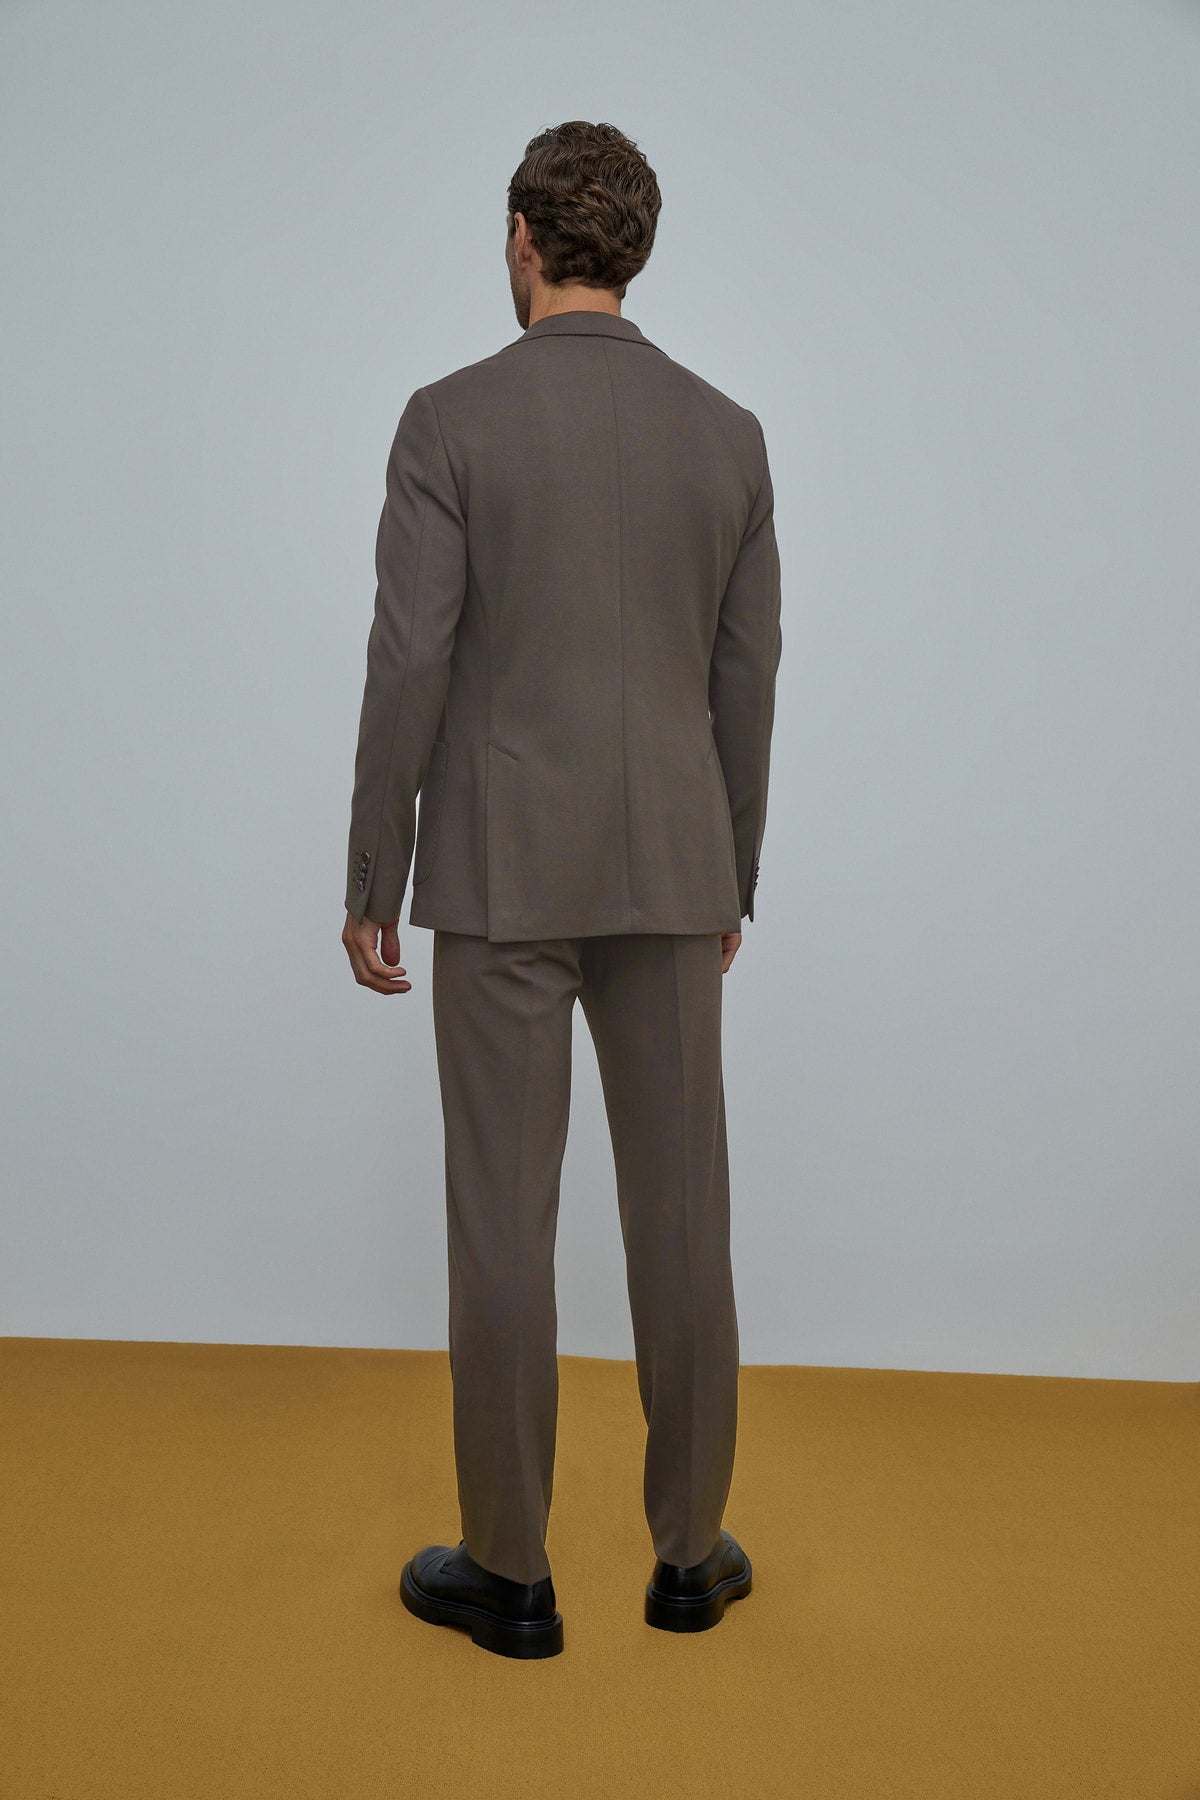 Khaki Air Chino Suit